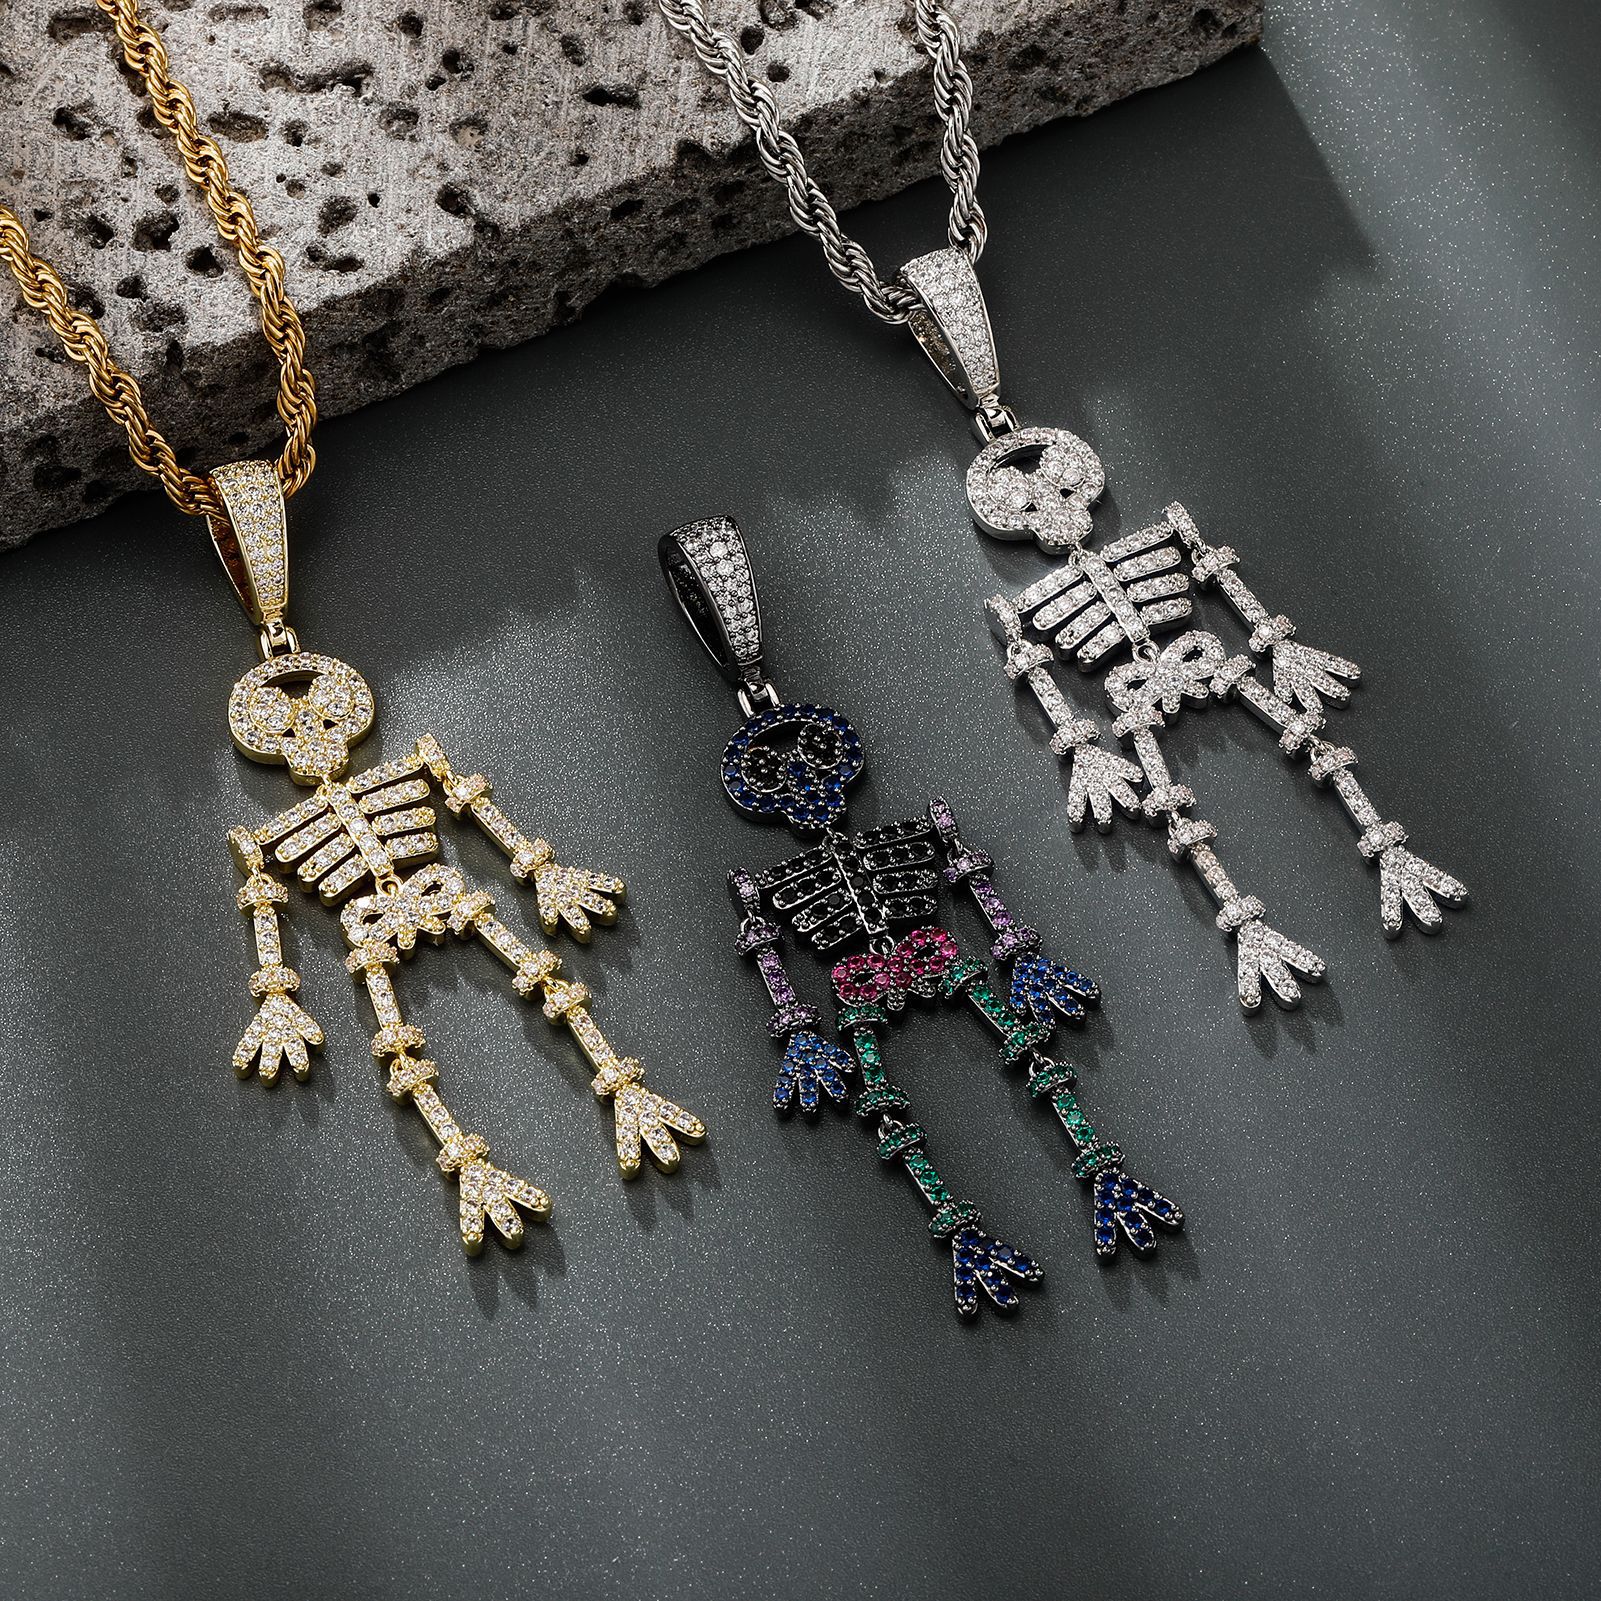 Männer Halskette mit Skelett Anhänger